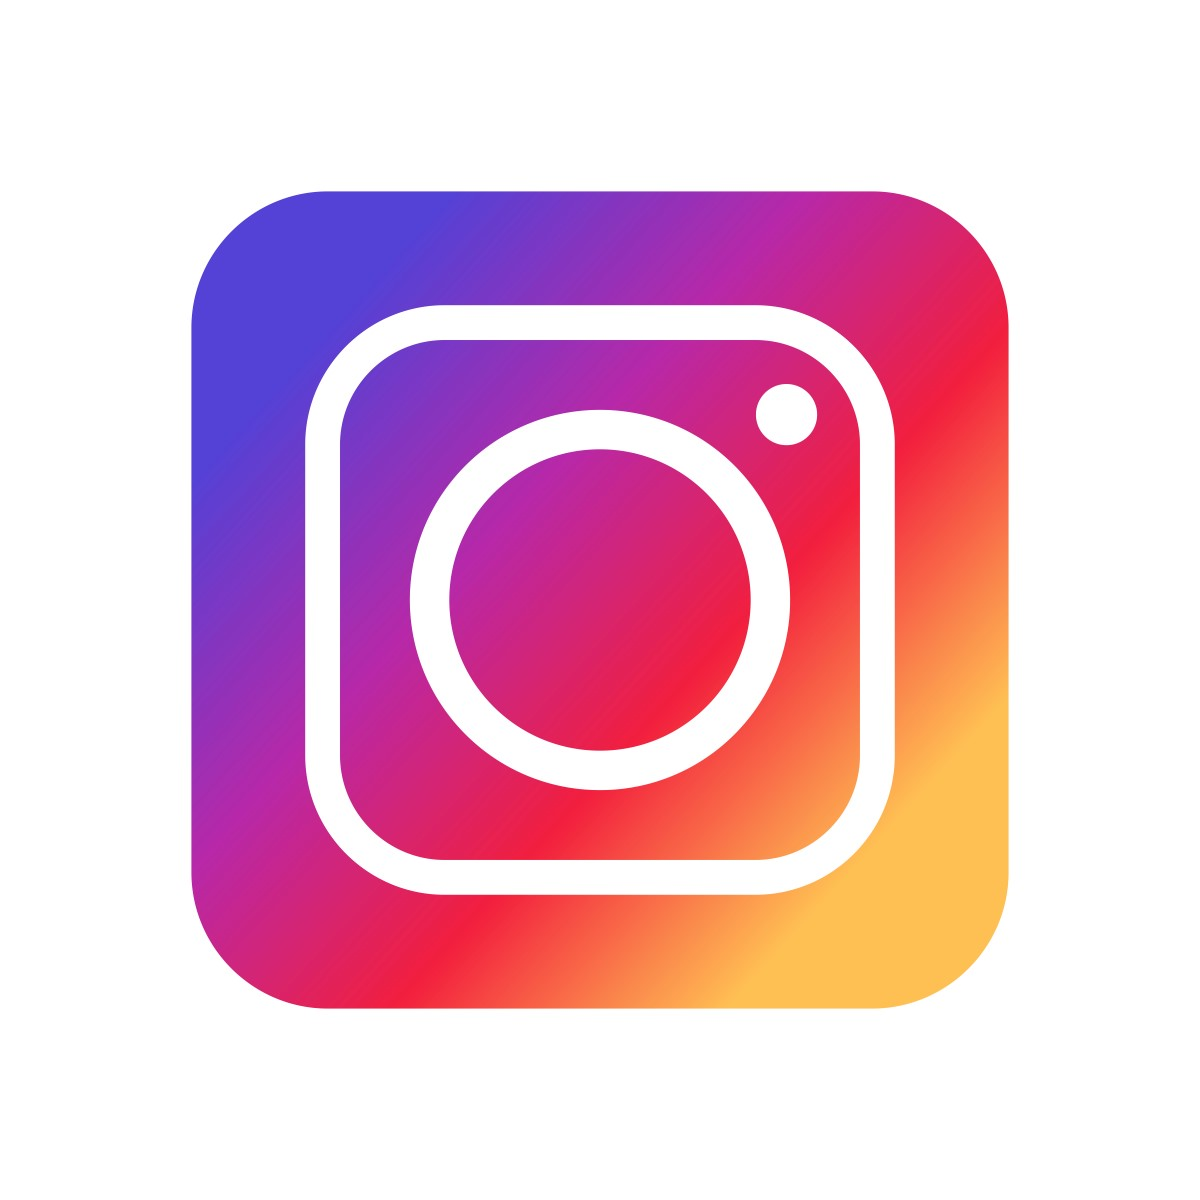 Instagram reels have take the platform by storm